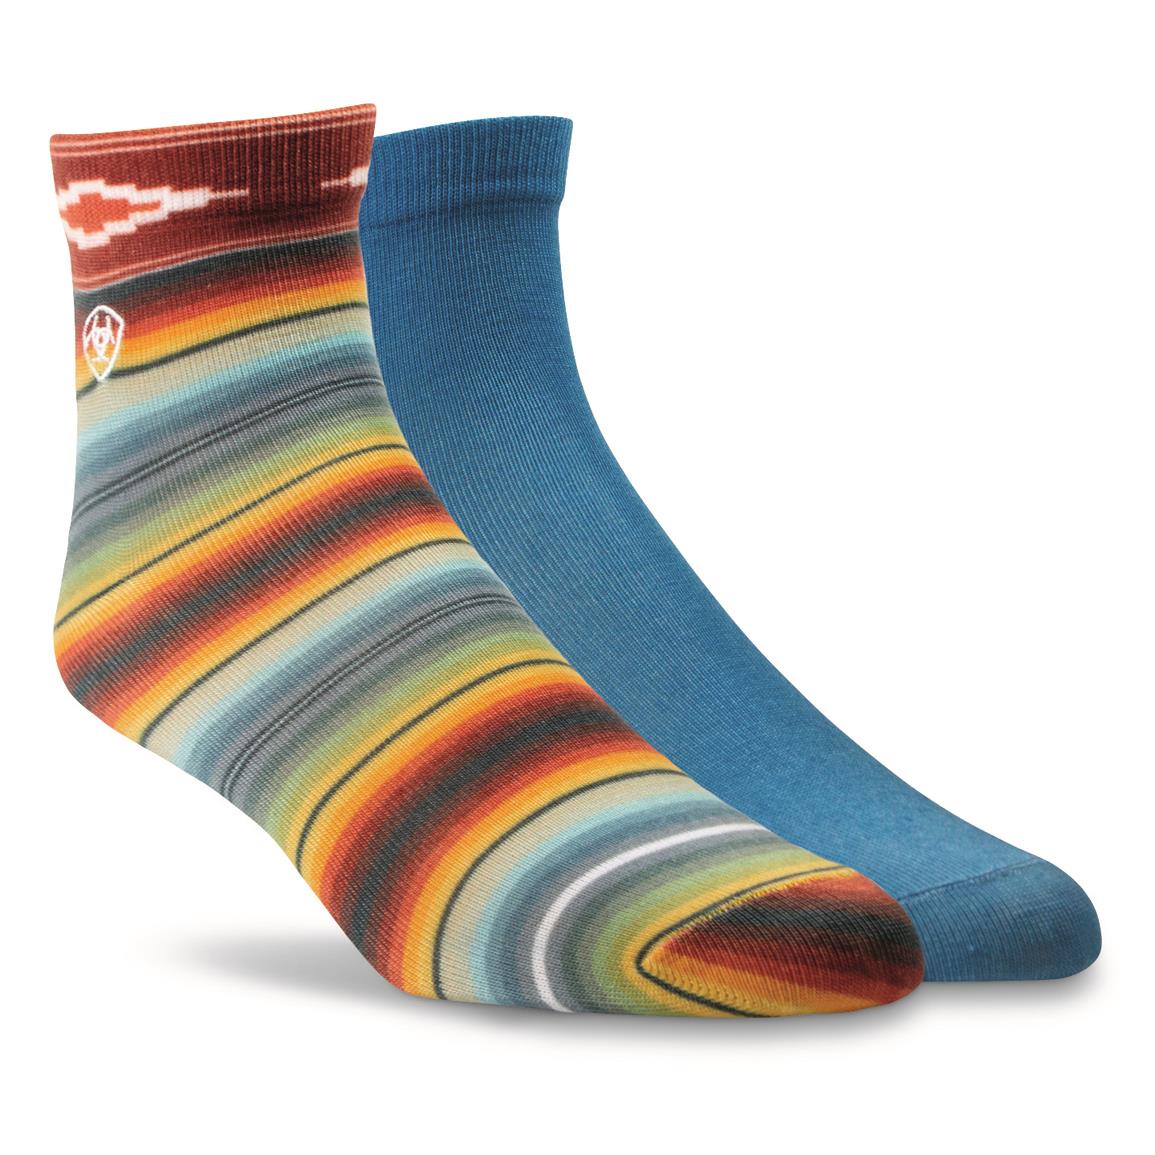 Ariat Women's Print Ankle Socks, 2 Pairs, Muted Serape/sky Blue